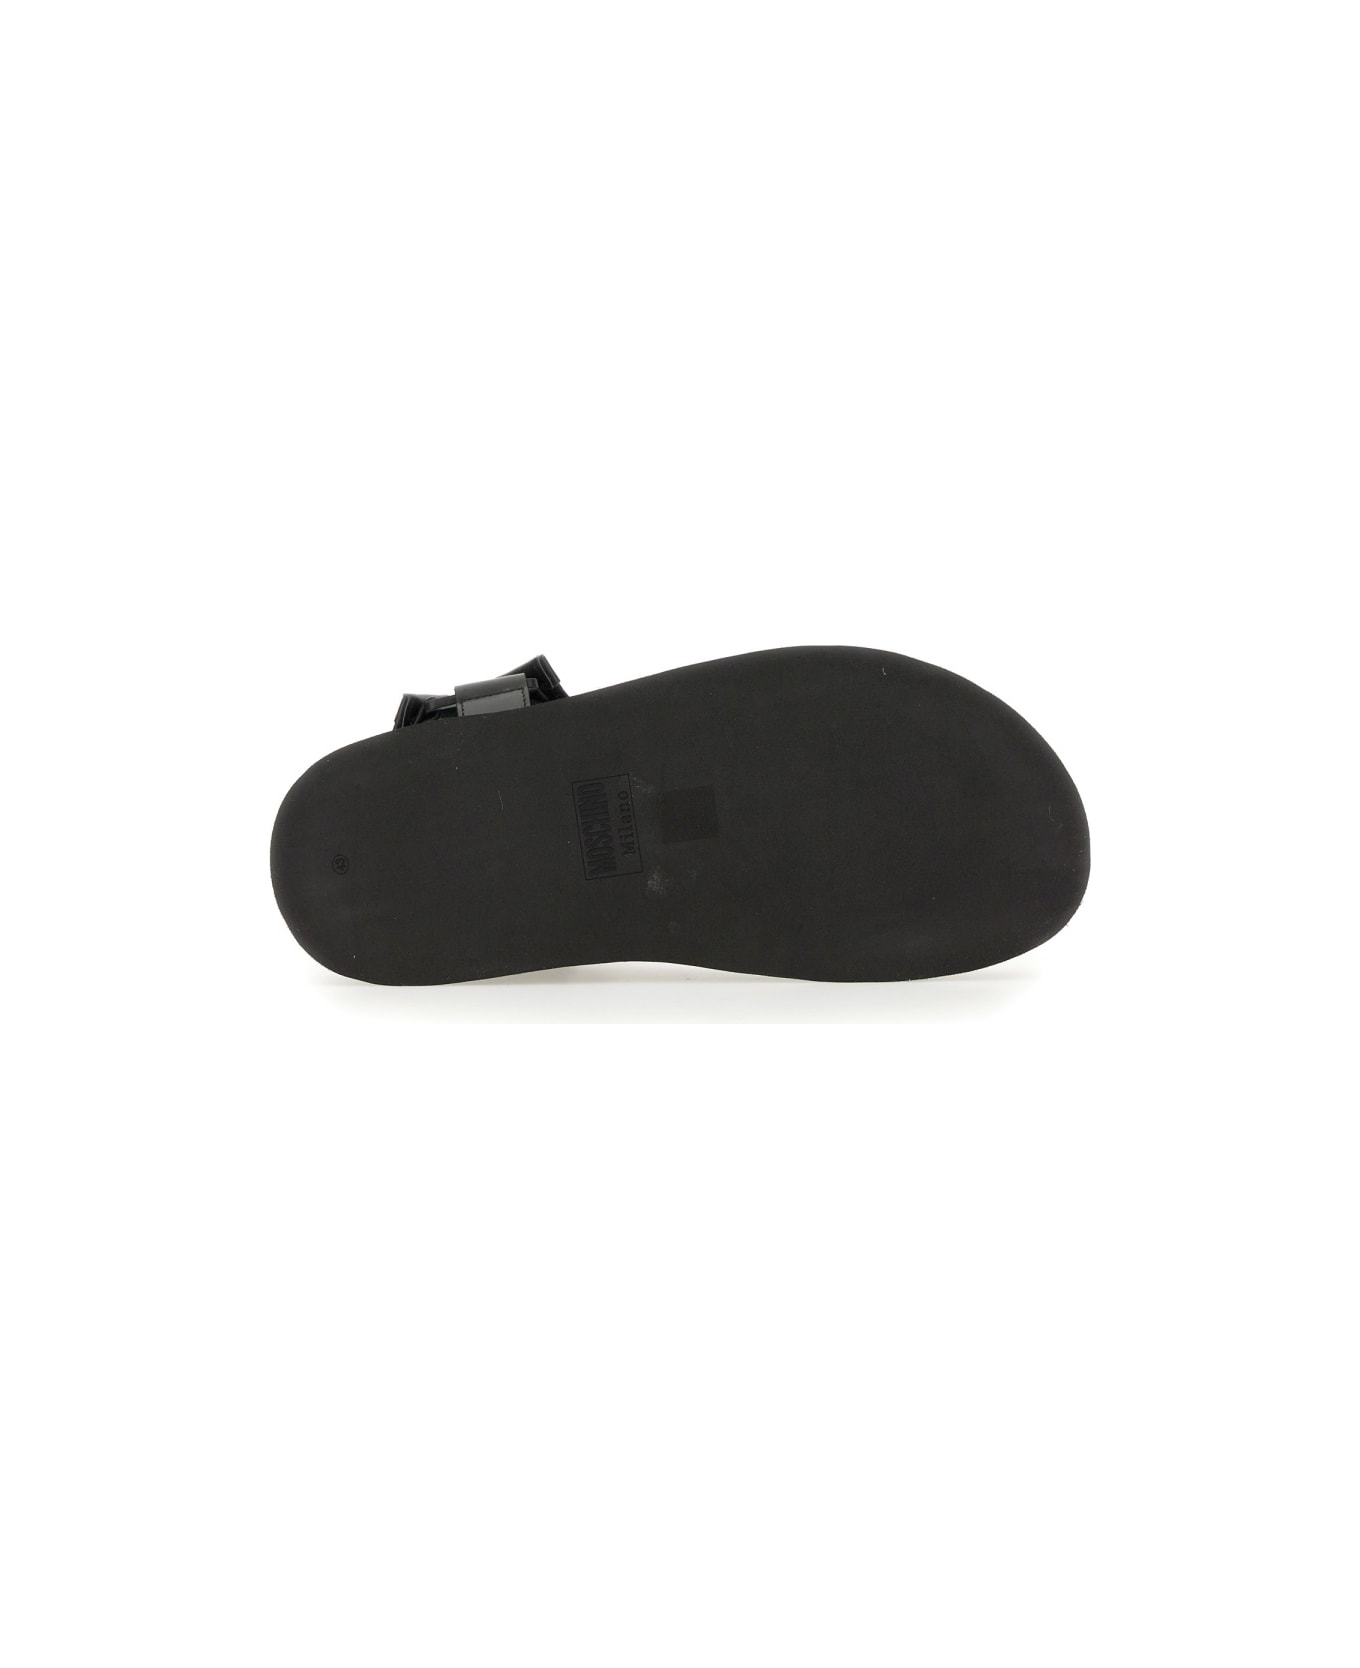 Moschino Sandal With Logo - BLACK